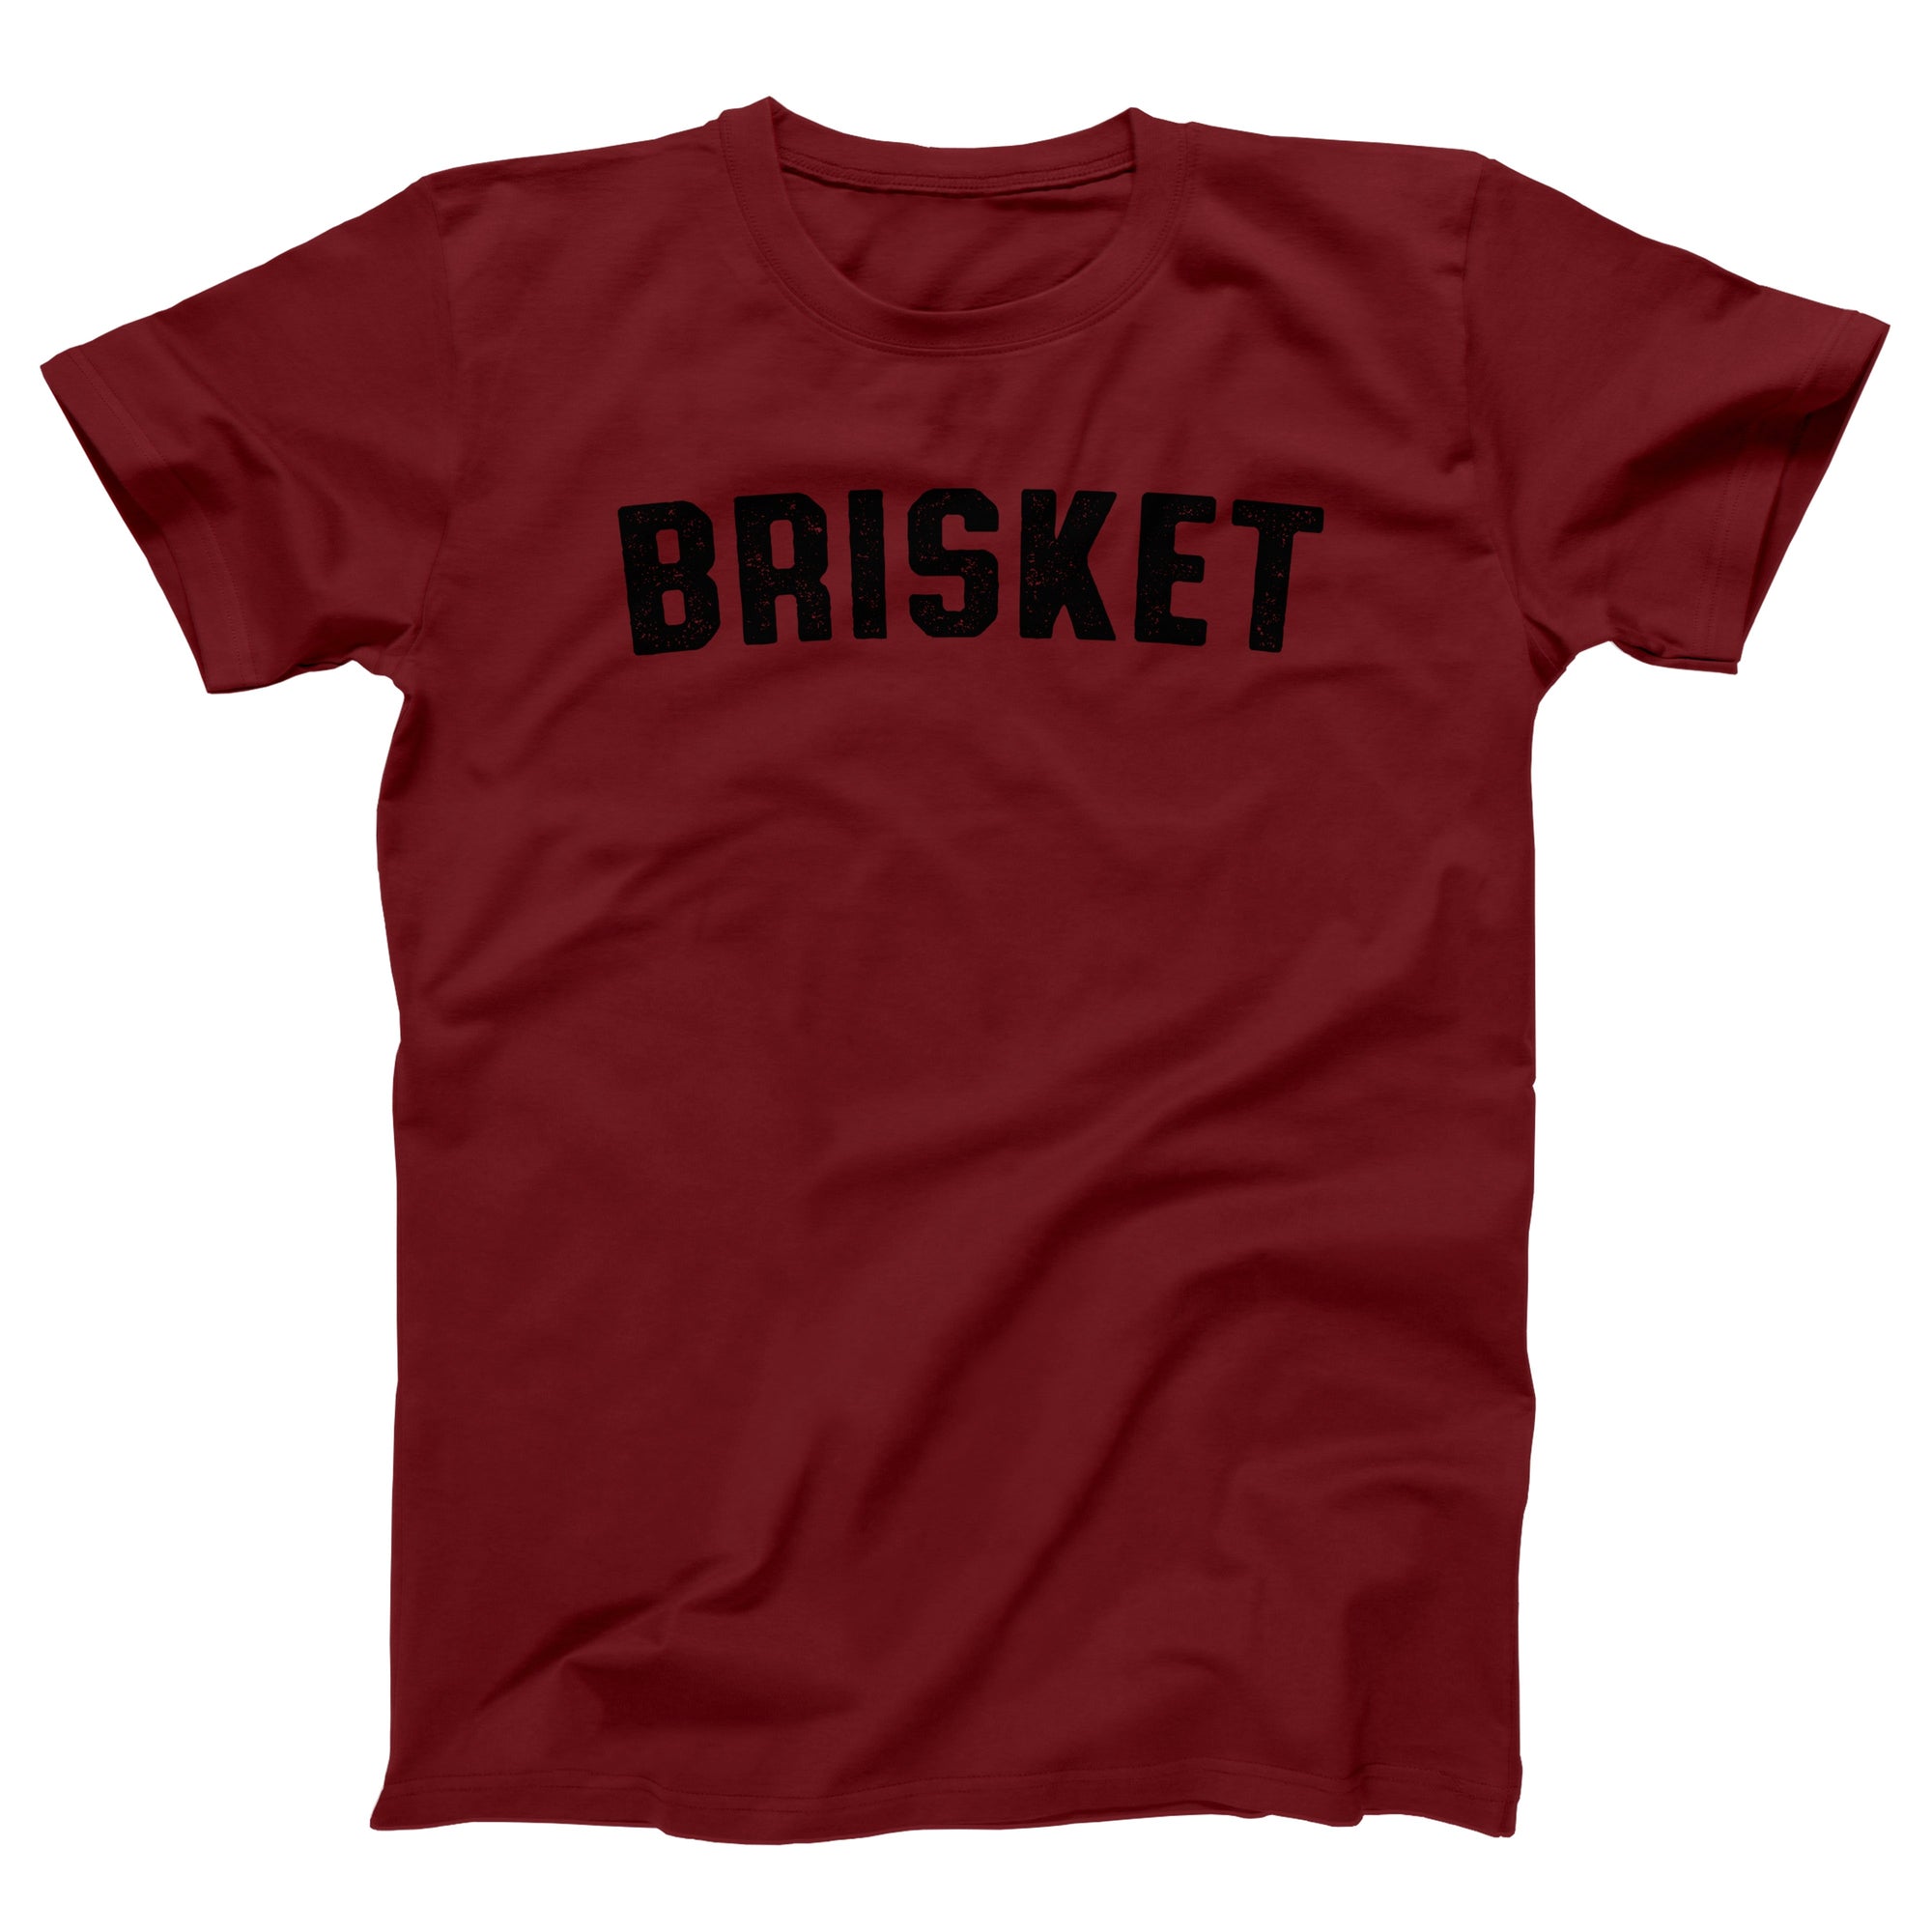 Brisket Adult Unisex T-Shirt - anishphilip